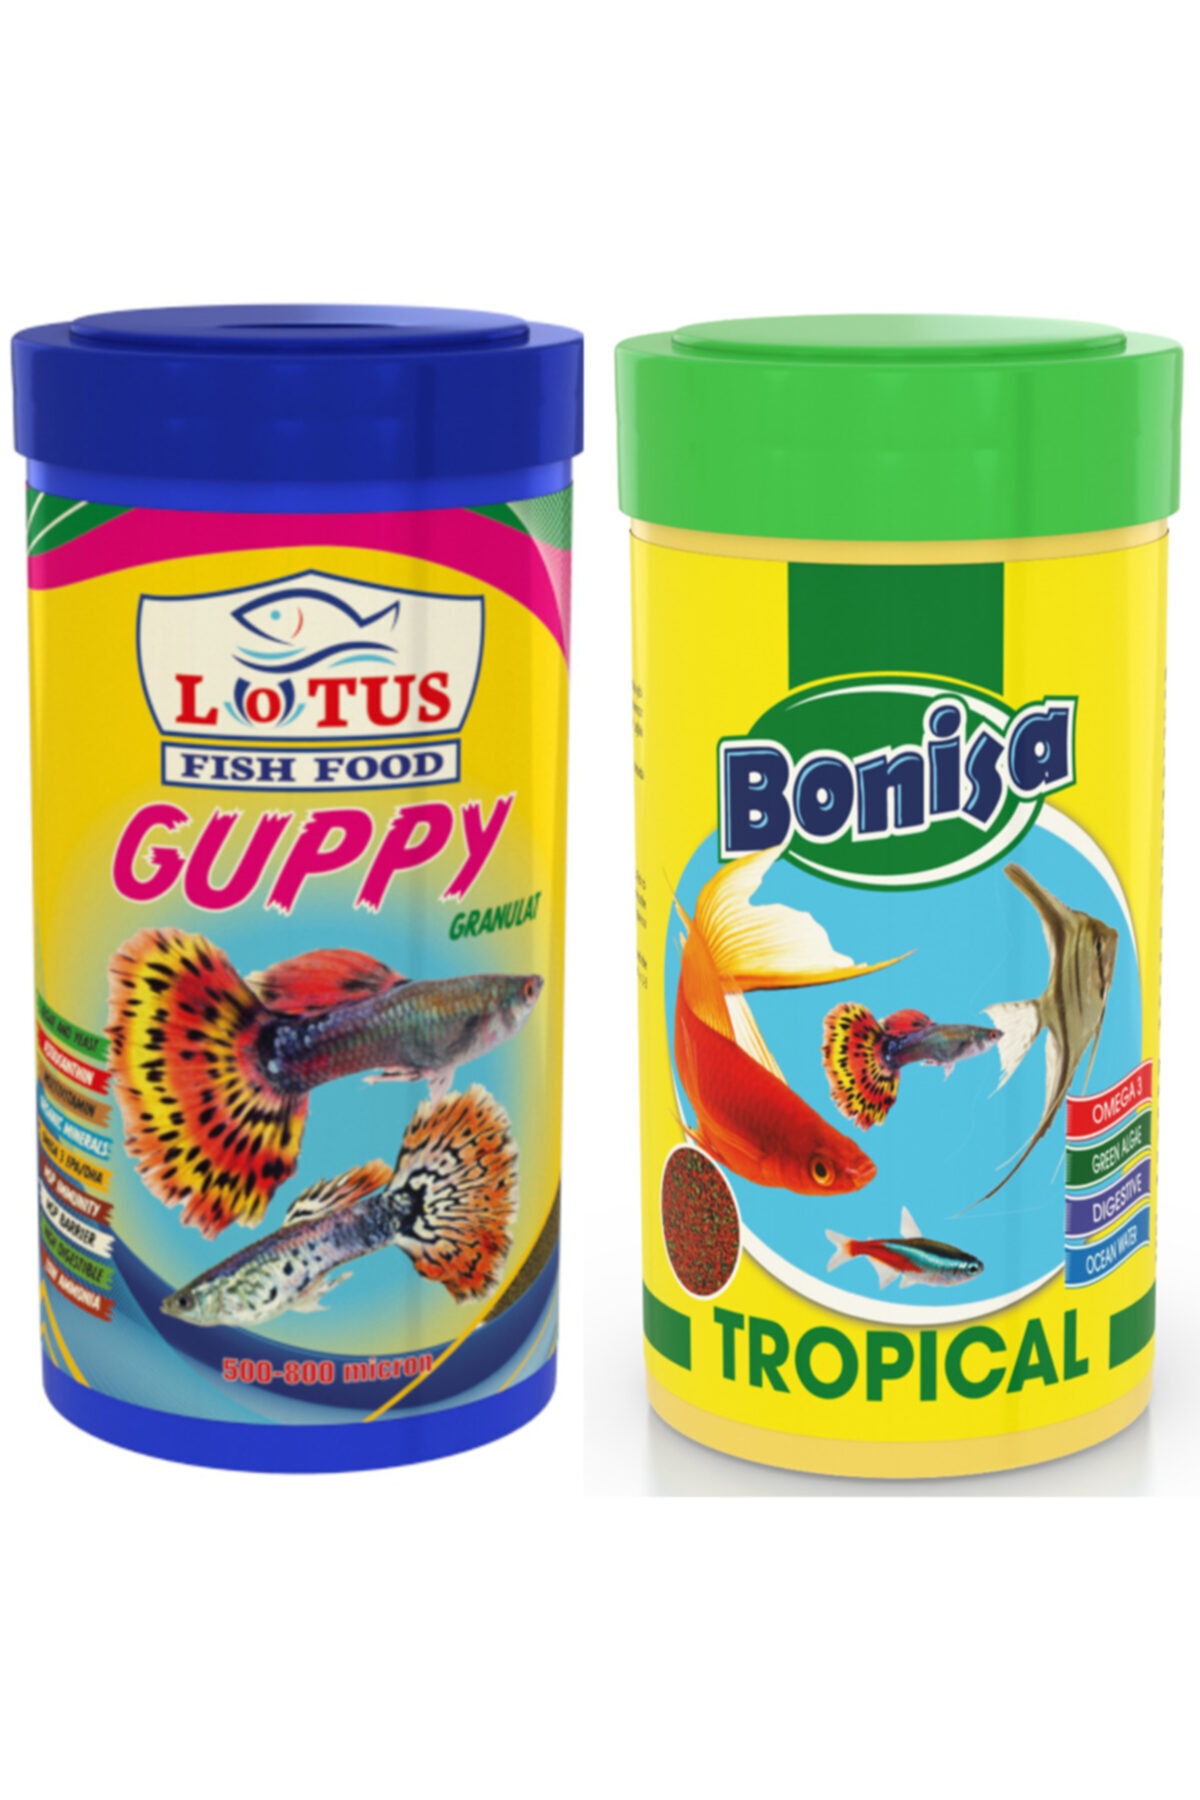 Lotus Guppy Granulat 250 Ml Ve Bonisa Tropical 250 Ml Balık Yemi